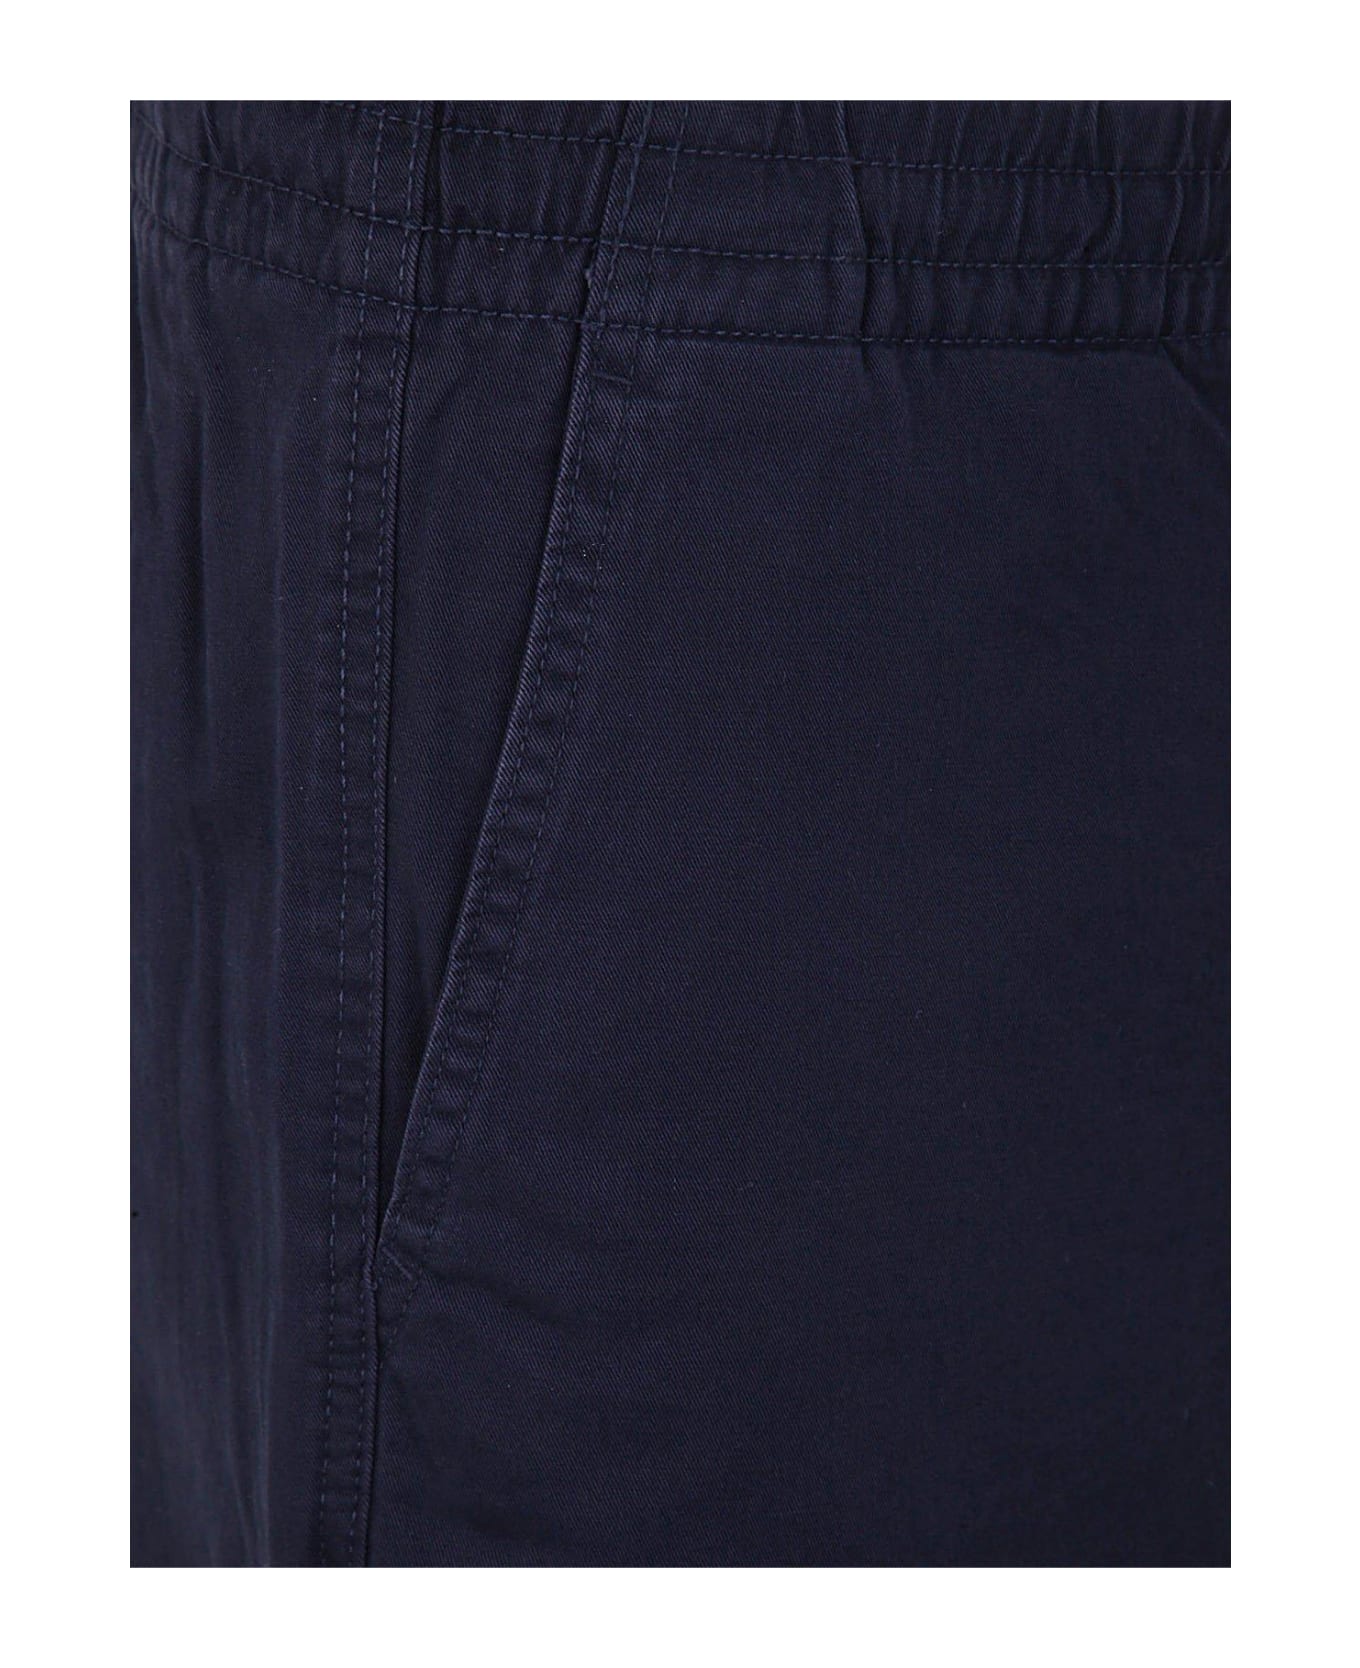 Polo Ralph Lauren Chino Shorts - Nautical Ink